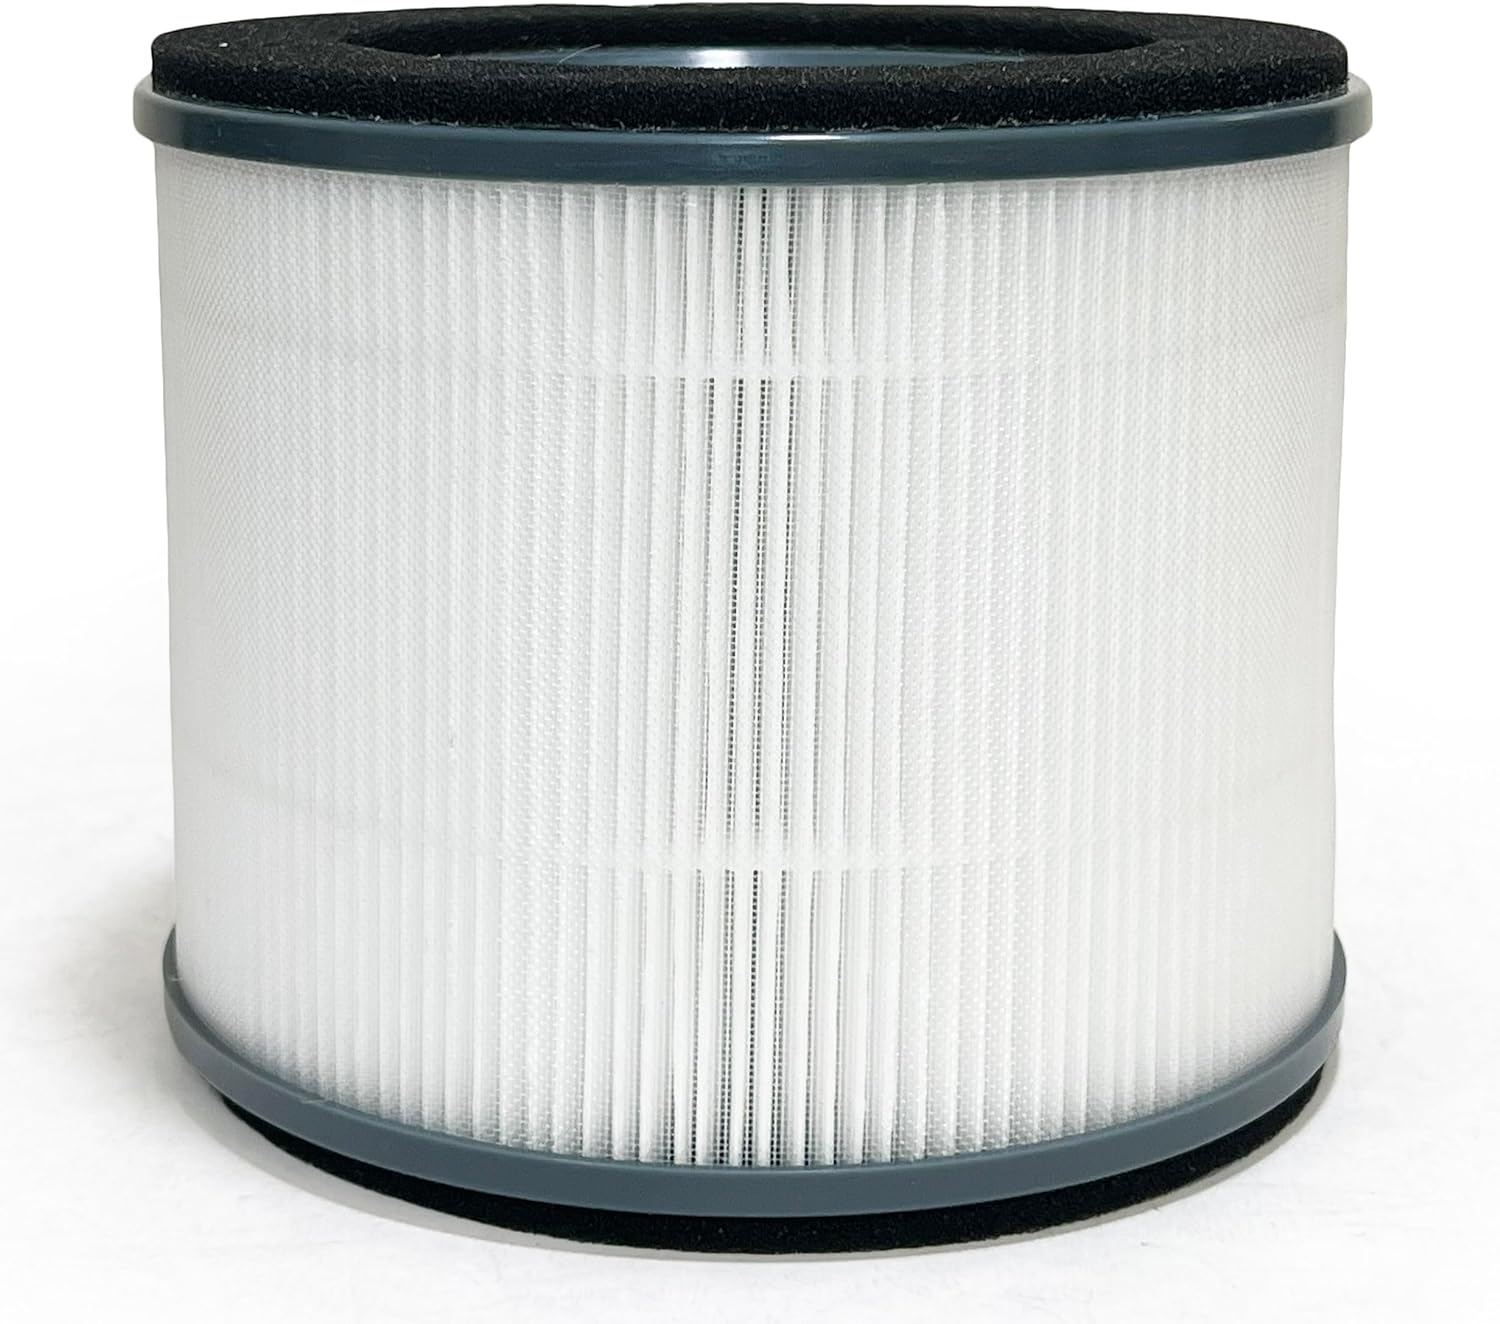 Nispira AP-T10 3-In-1 Activated Carbon True HEPA Filter Replacement For Homedics Air Purifier AP-T10-BK AP-T10-WT | Removes Smoke, Chemical VOCs, Odor, Pet Dander